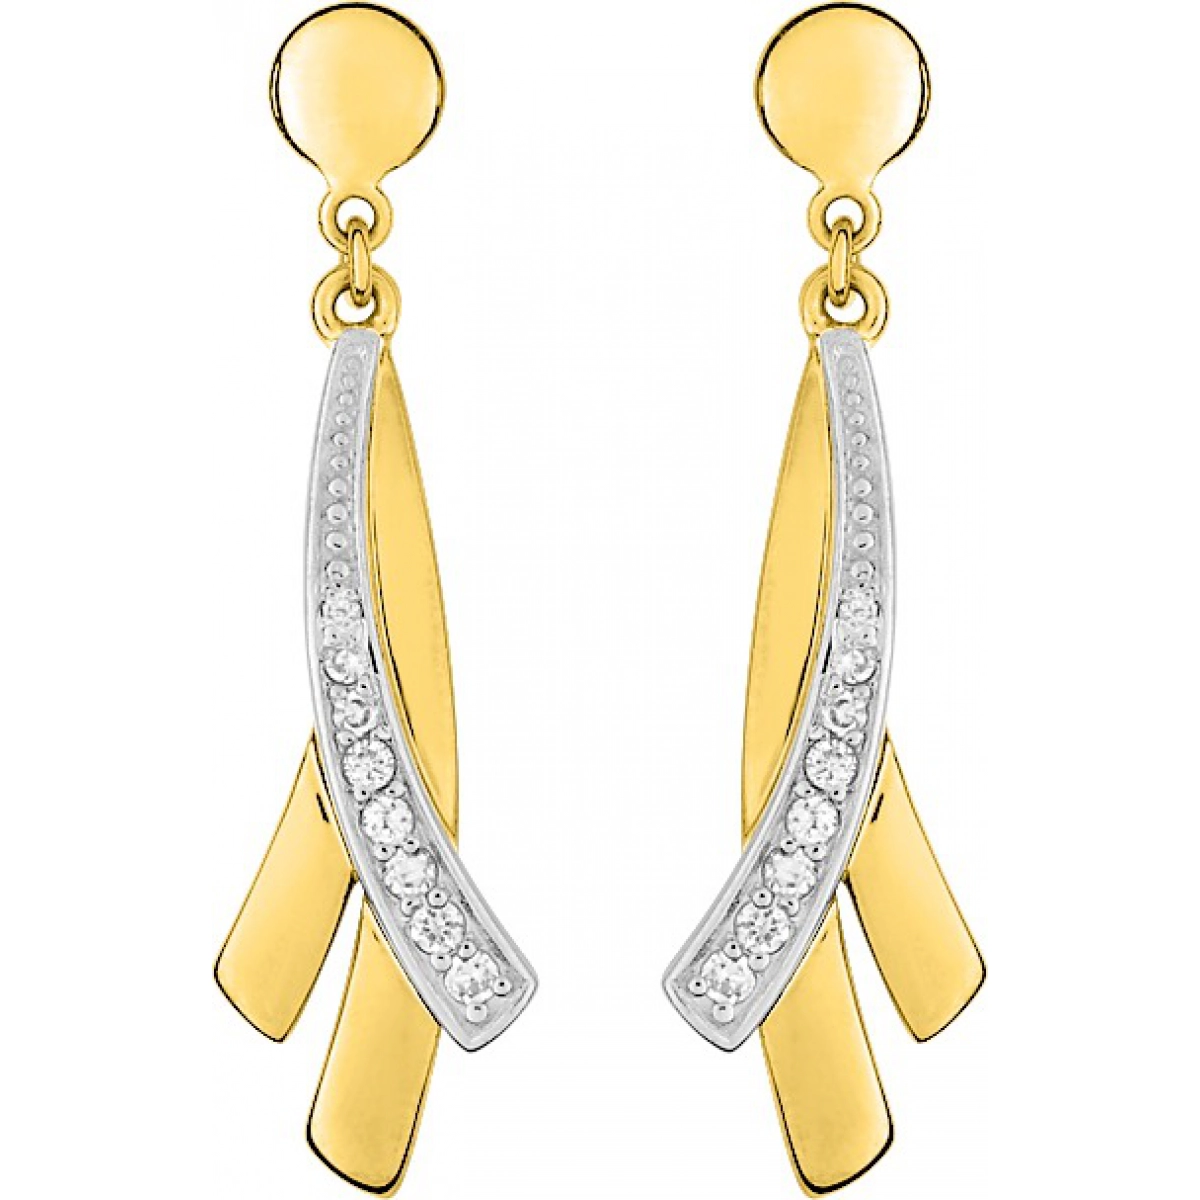 Earrings pair w. cz gold plated Brass 2TG  Lua Blanca  BSWD67Z.0